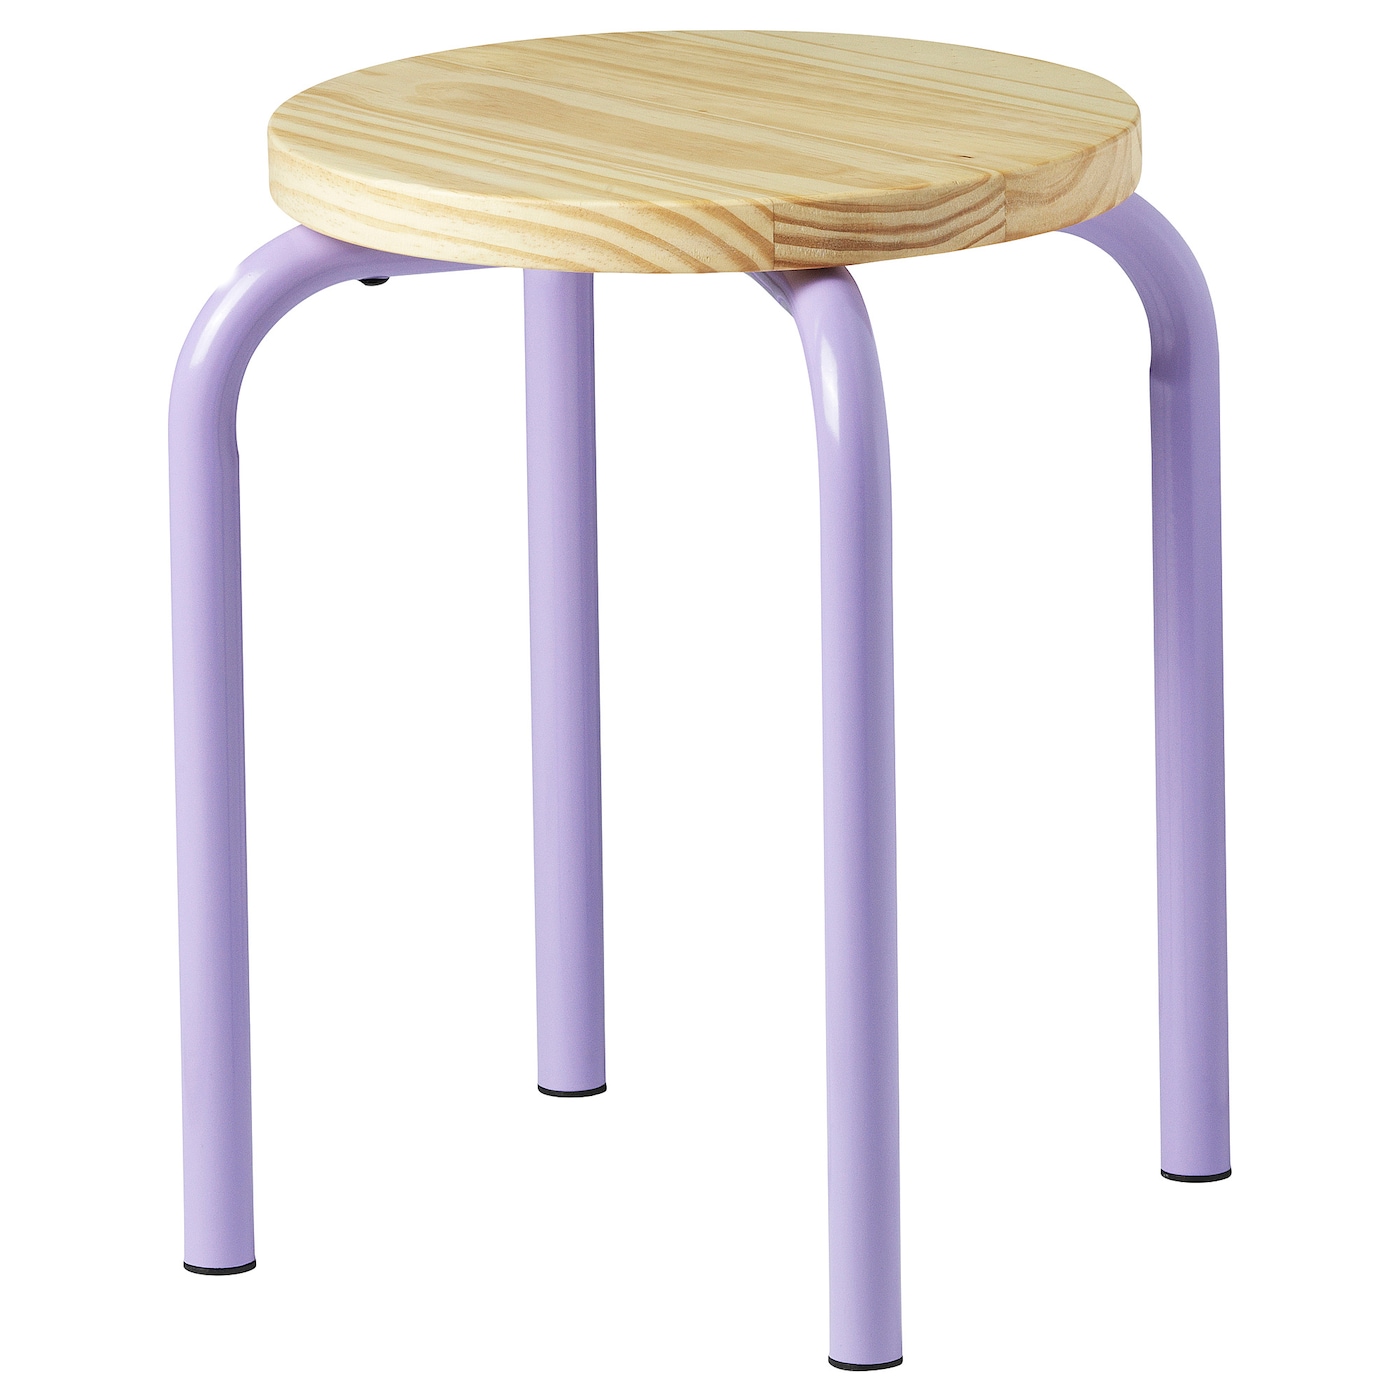 Табуретка сиренево-сосна - DOMSTEN IKEA/ ДОМСТЕН ИКЕА, 45 см, бежевый/фиолетовый